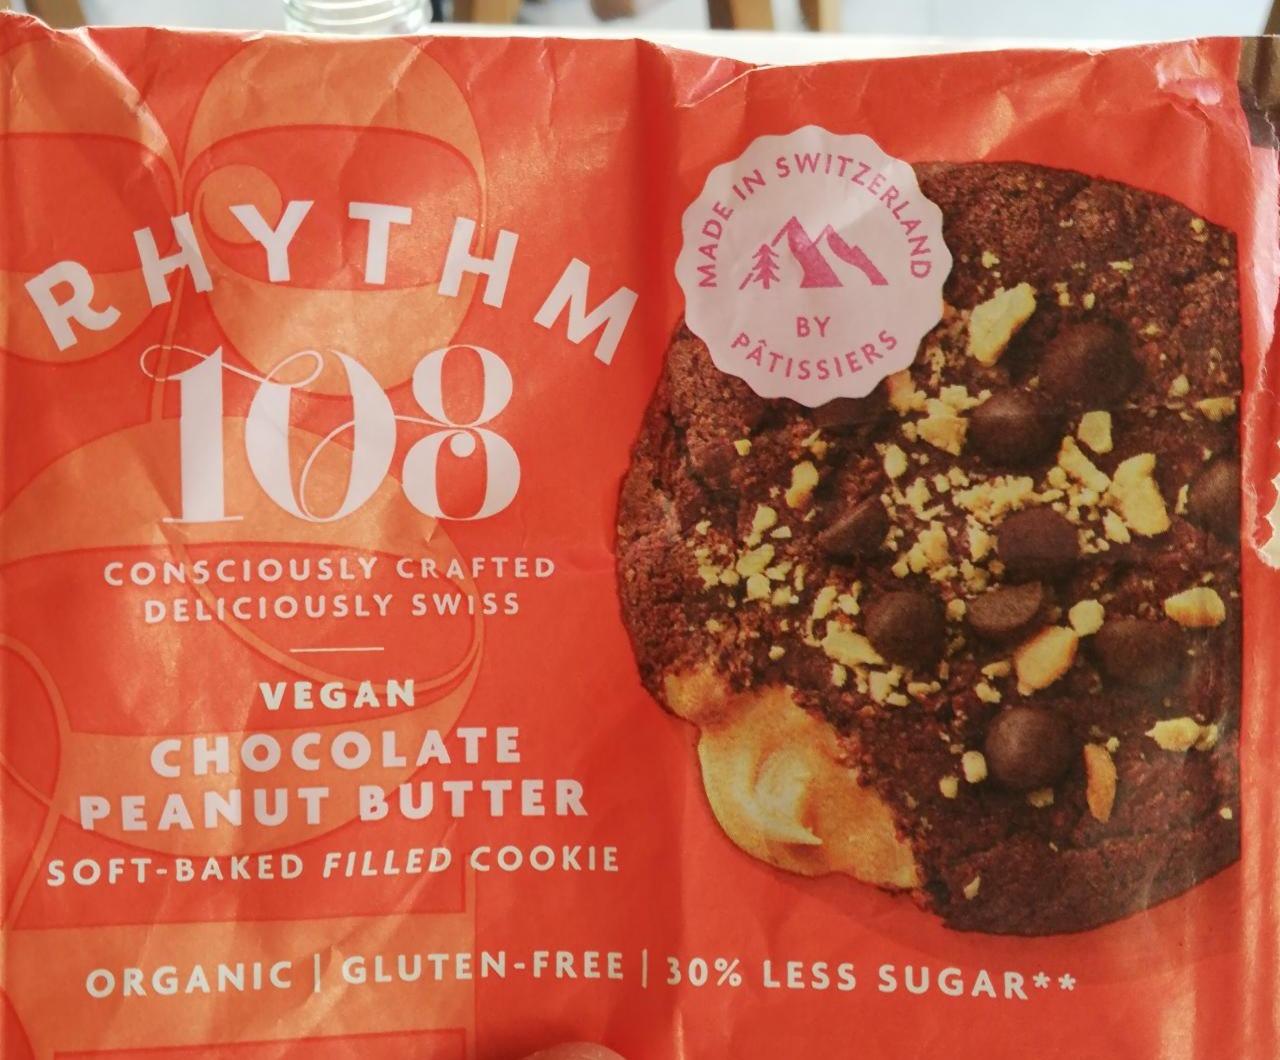 Fotografie - Rhythm 108 Chocolate Peanut Butter Cookie